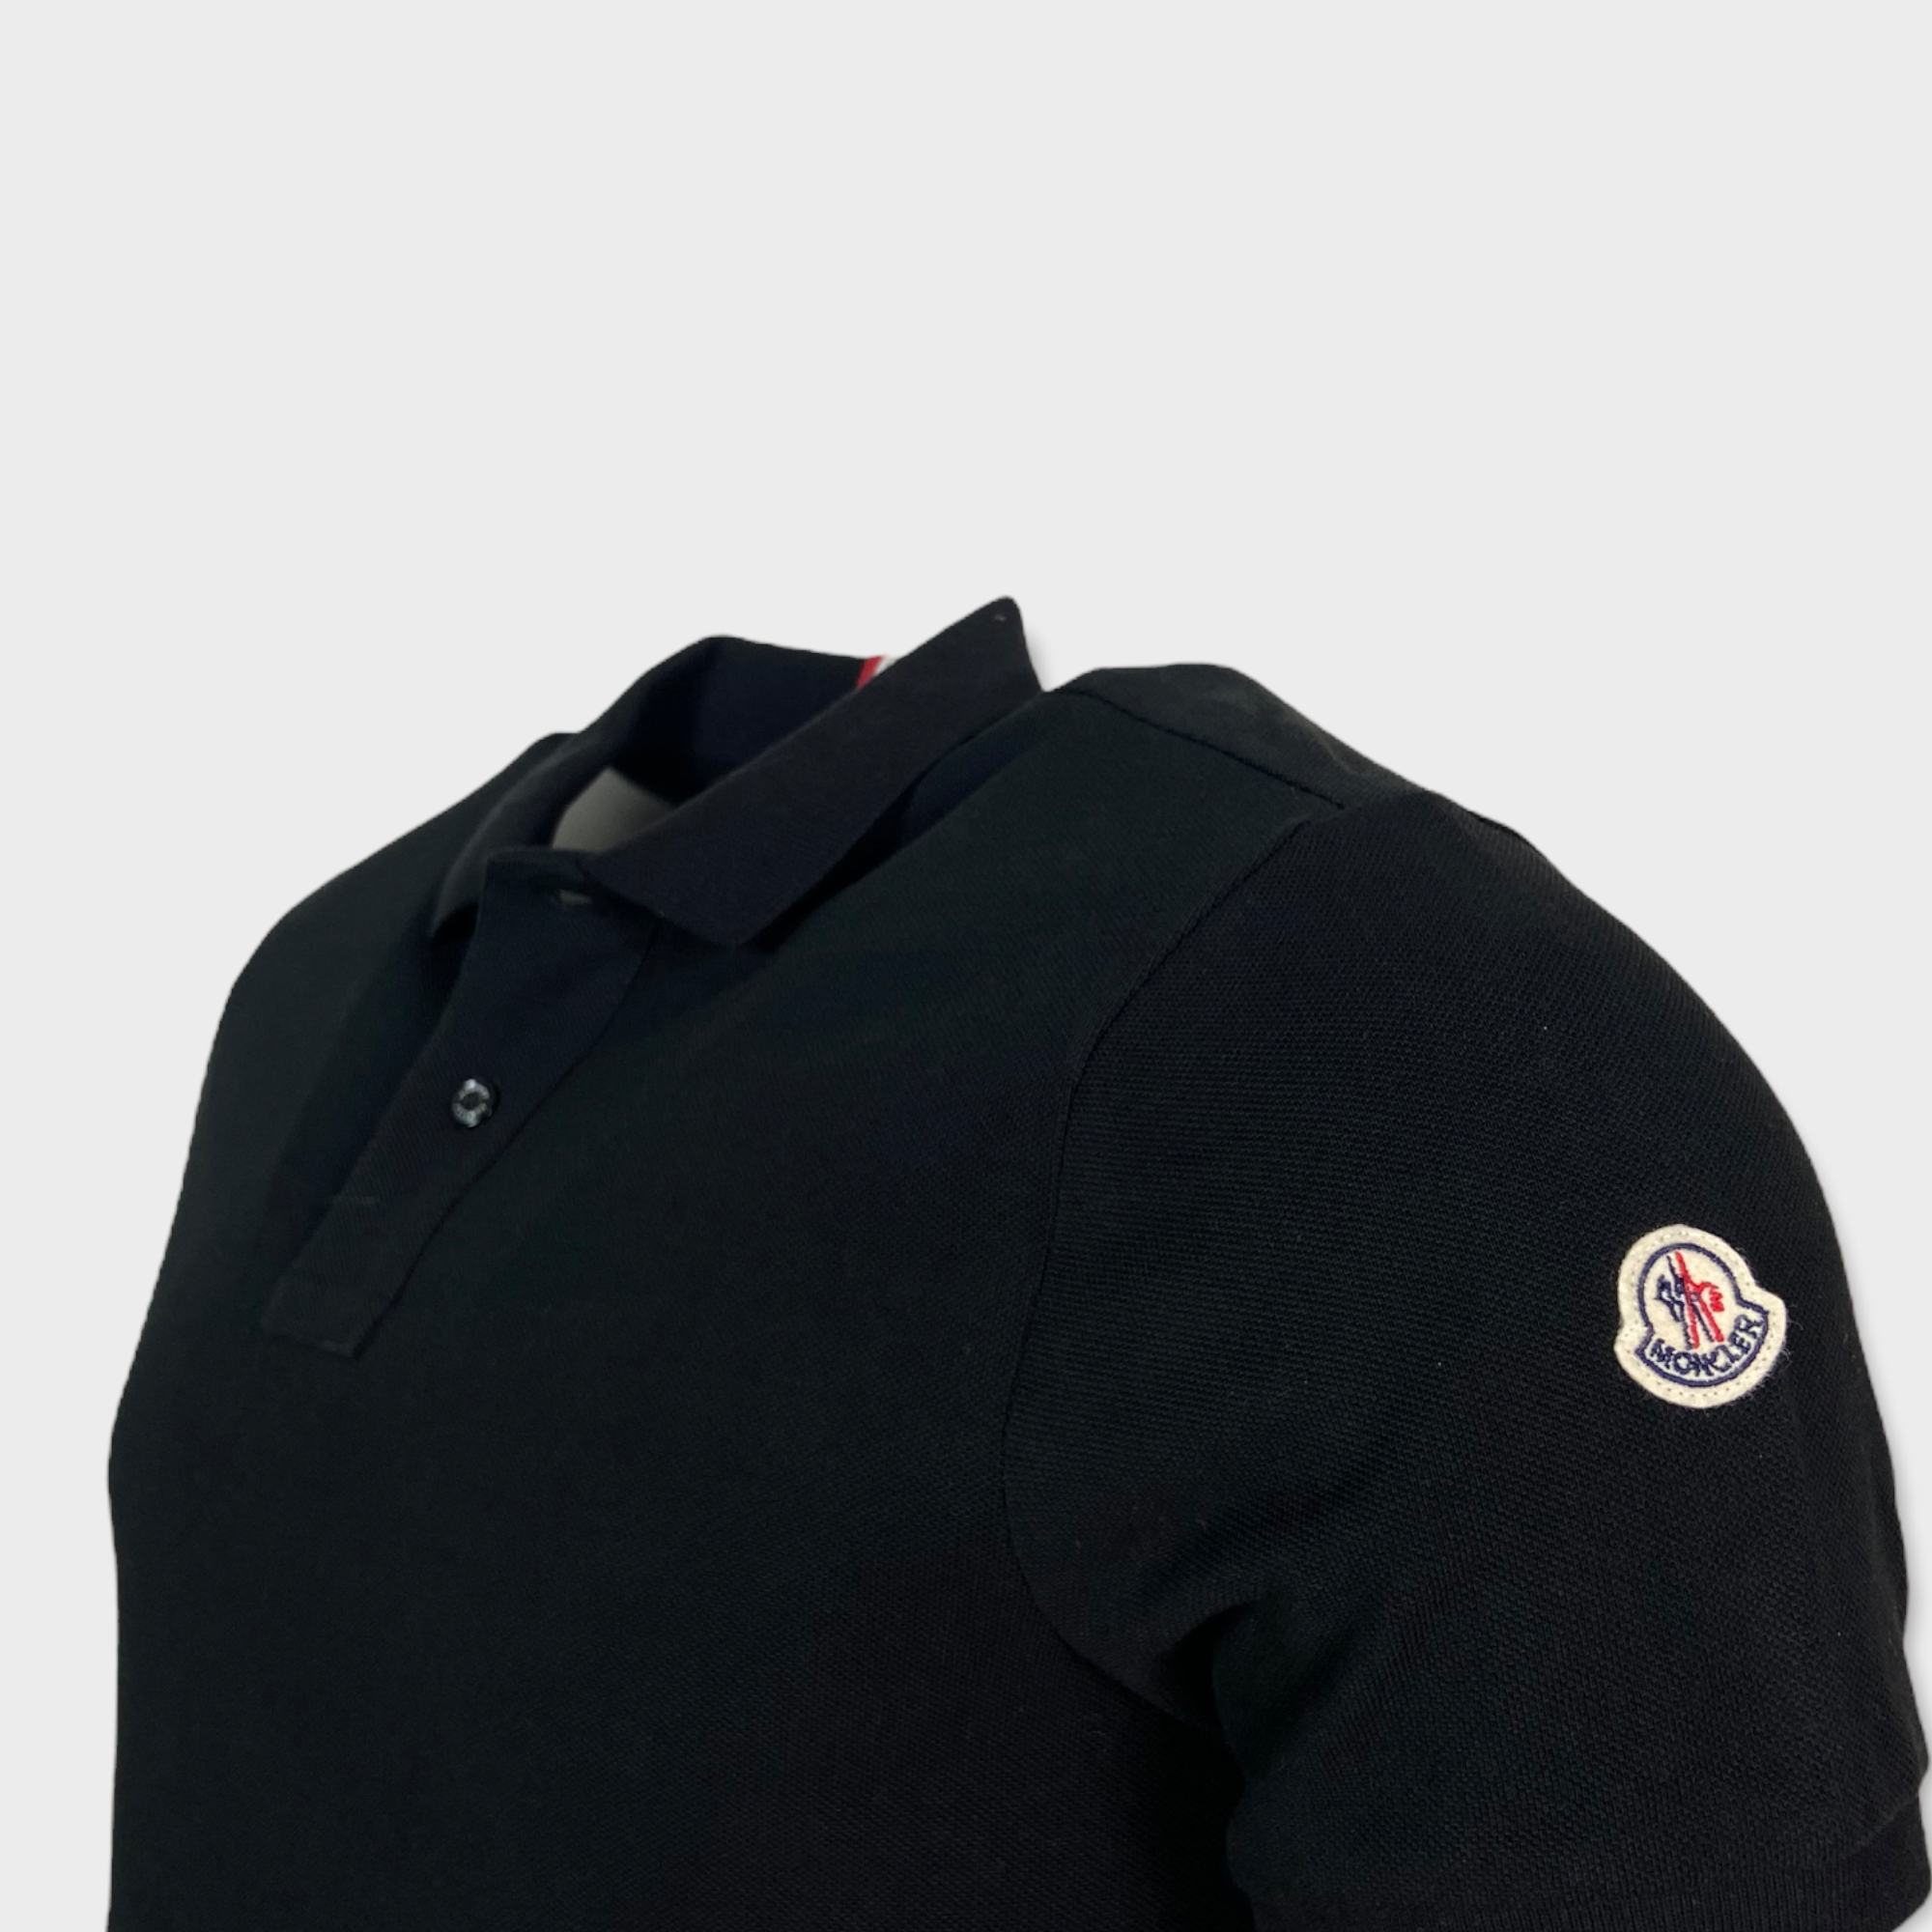 Moncler Polo Shirt - Size M (Fits S/M)